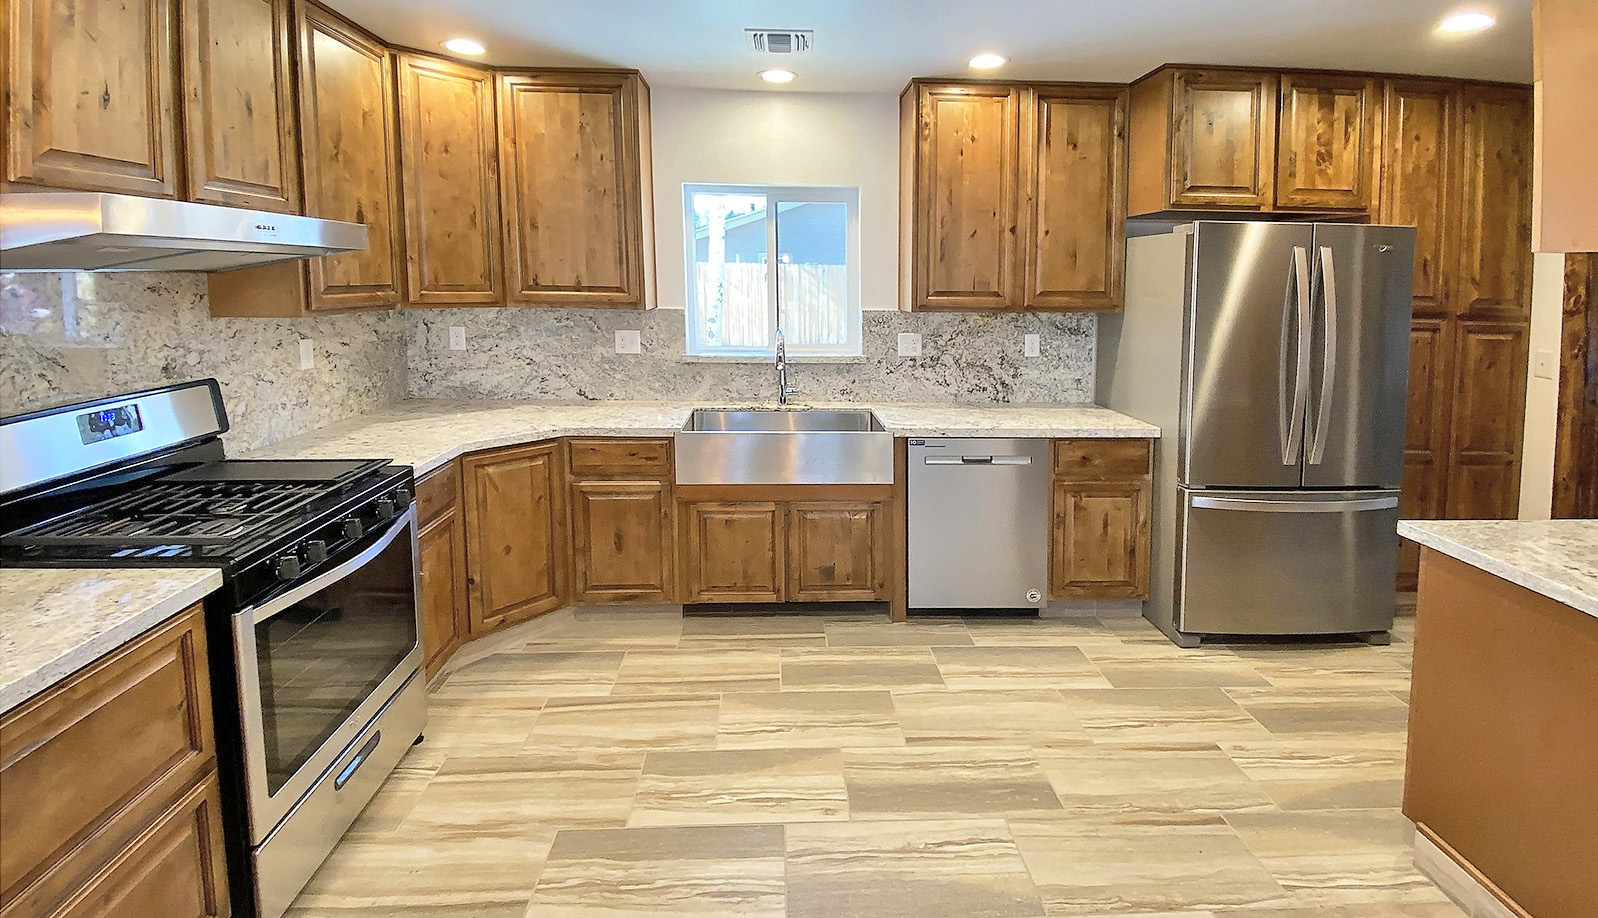 Remodeled kitchen in the Fort Valley neighborhood of Flagstaff Arizona